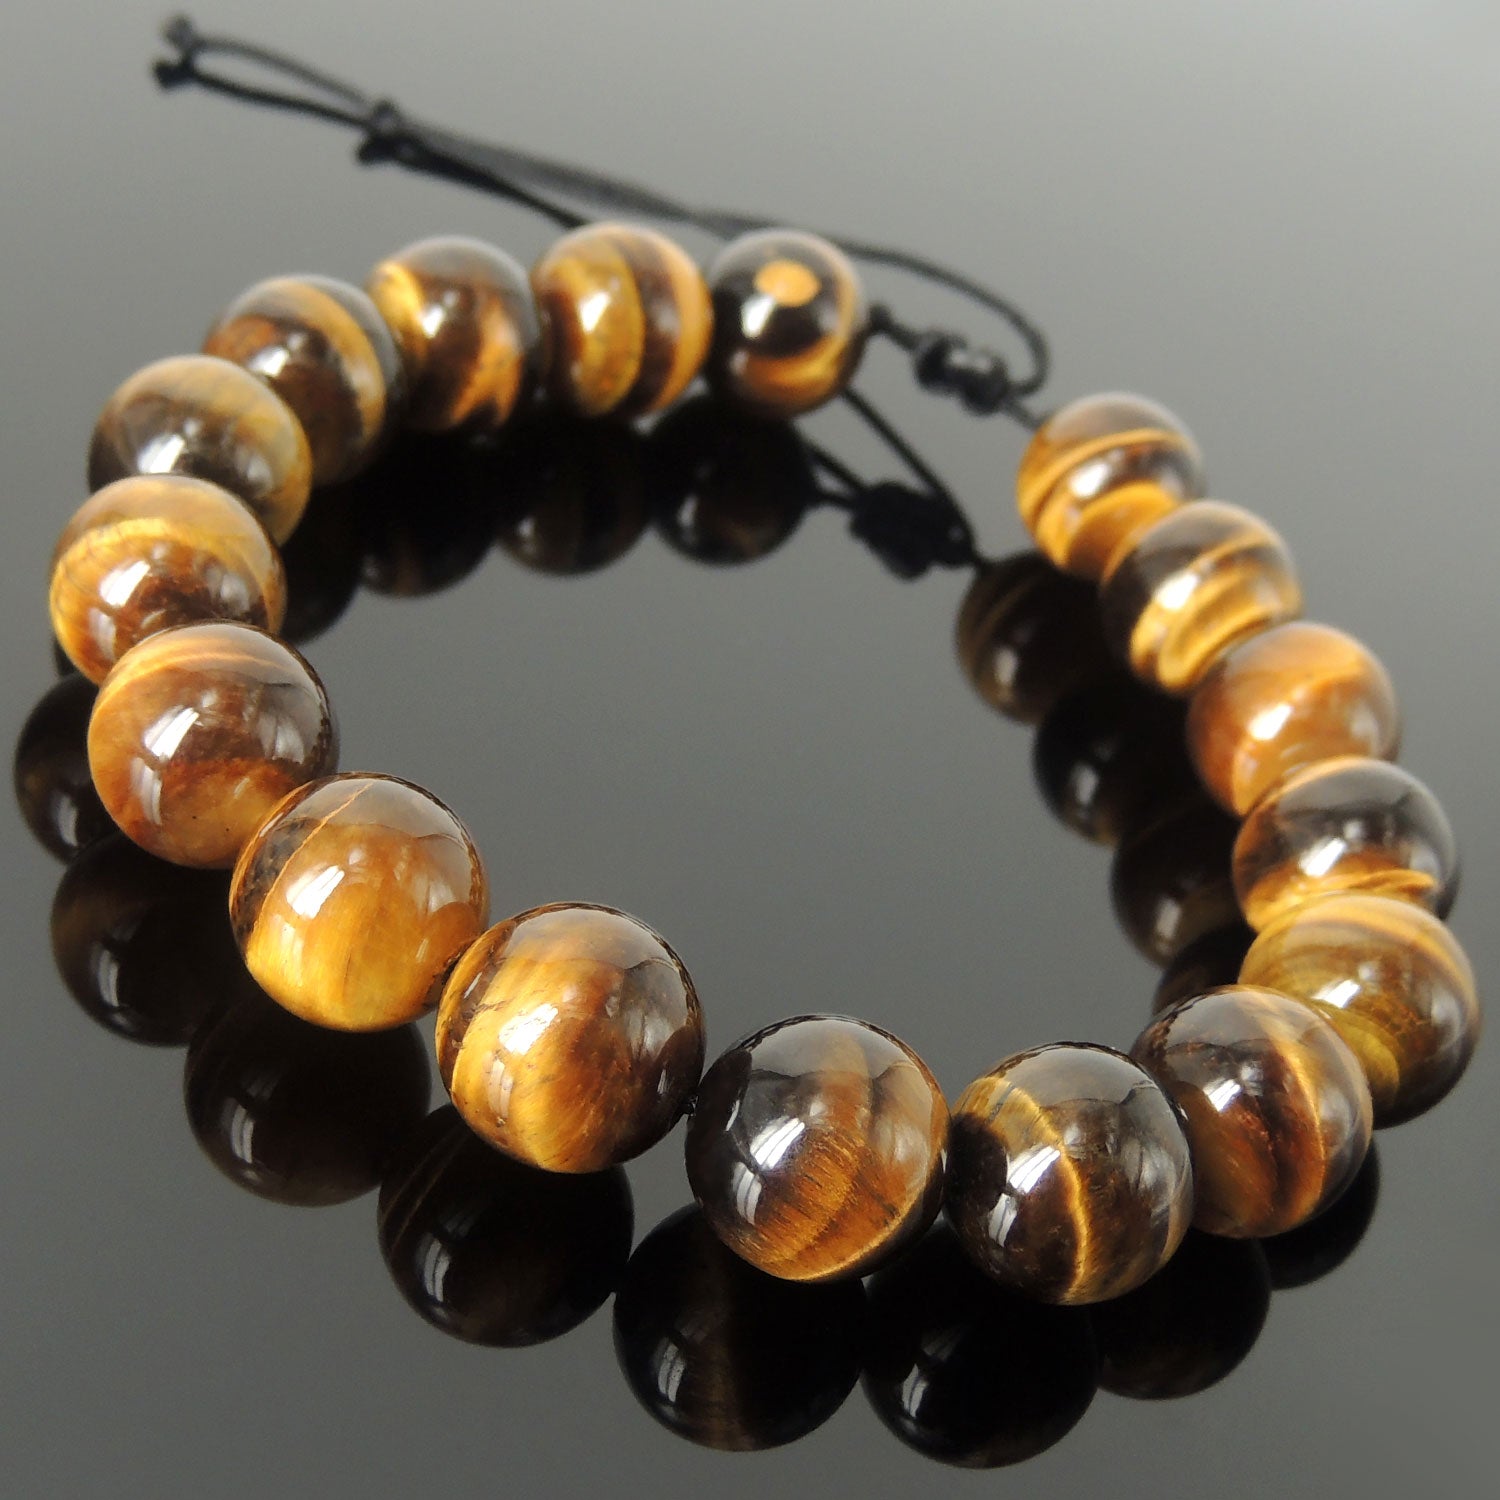 Handmade Yoga Jewelry Healing Gemstone Bracelet - Men's Women's Meditation, Security with Grade AA Brown Tiger Eye 12mm Beads, Adjustable Braided Cords BR1837